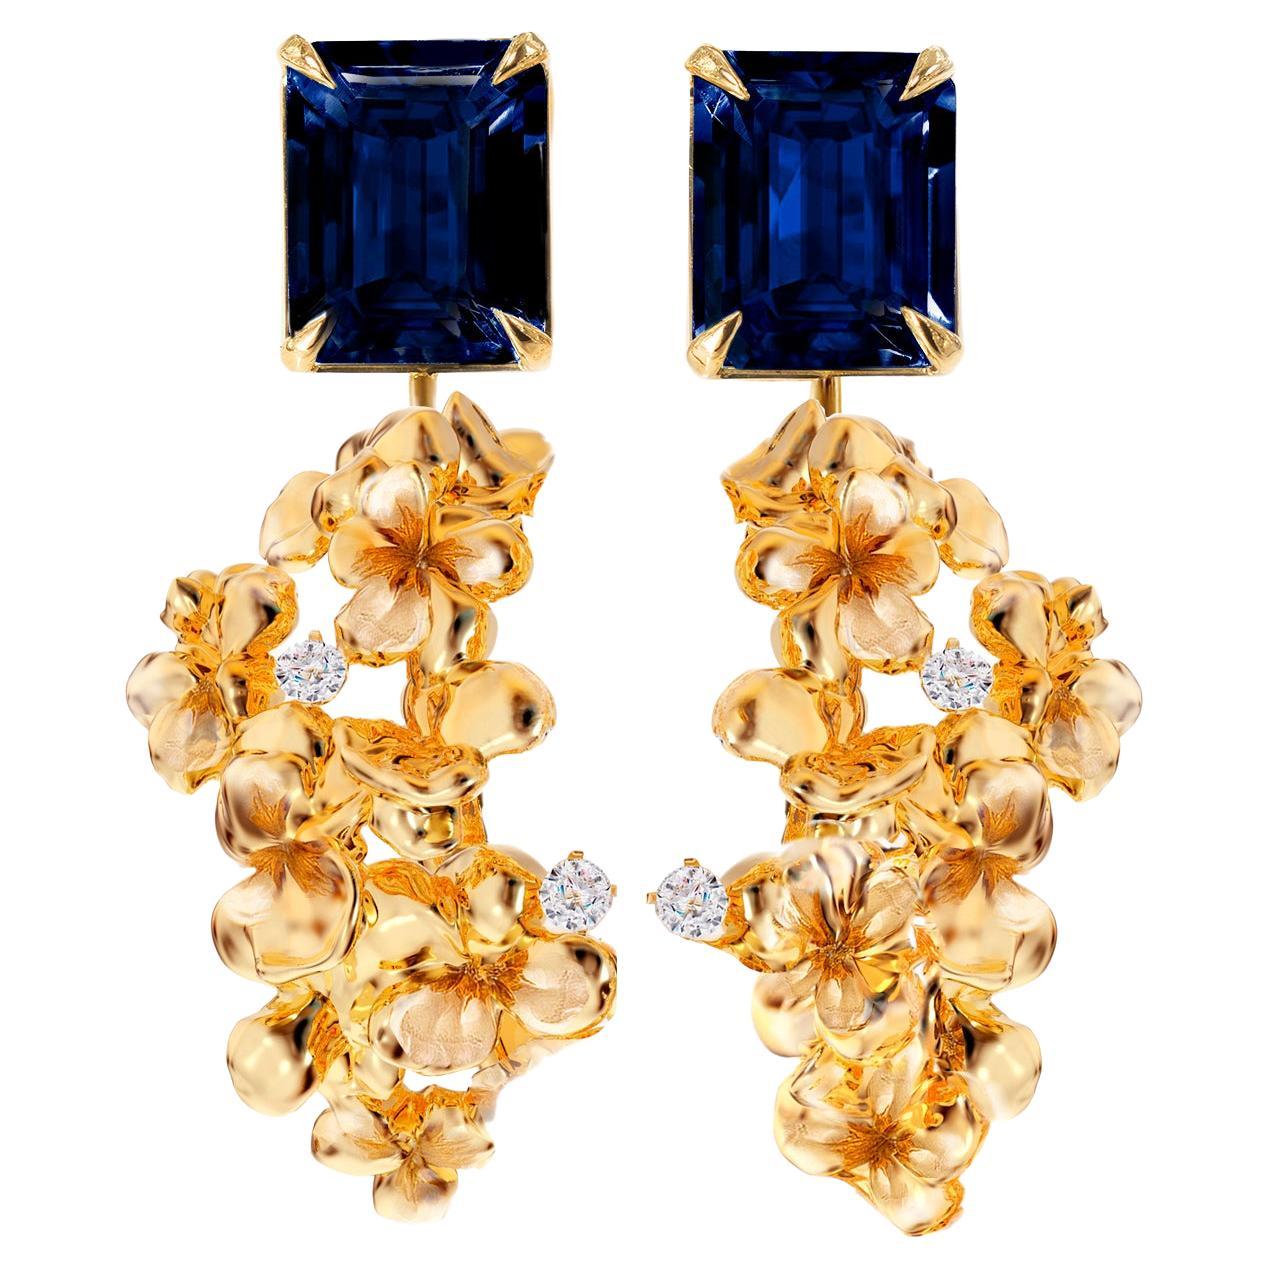 Eighteen Karat Yellow Gold Stud Earrings with Diamonds and Sapphires